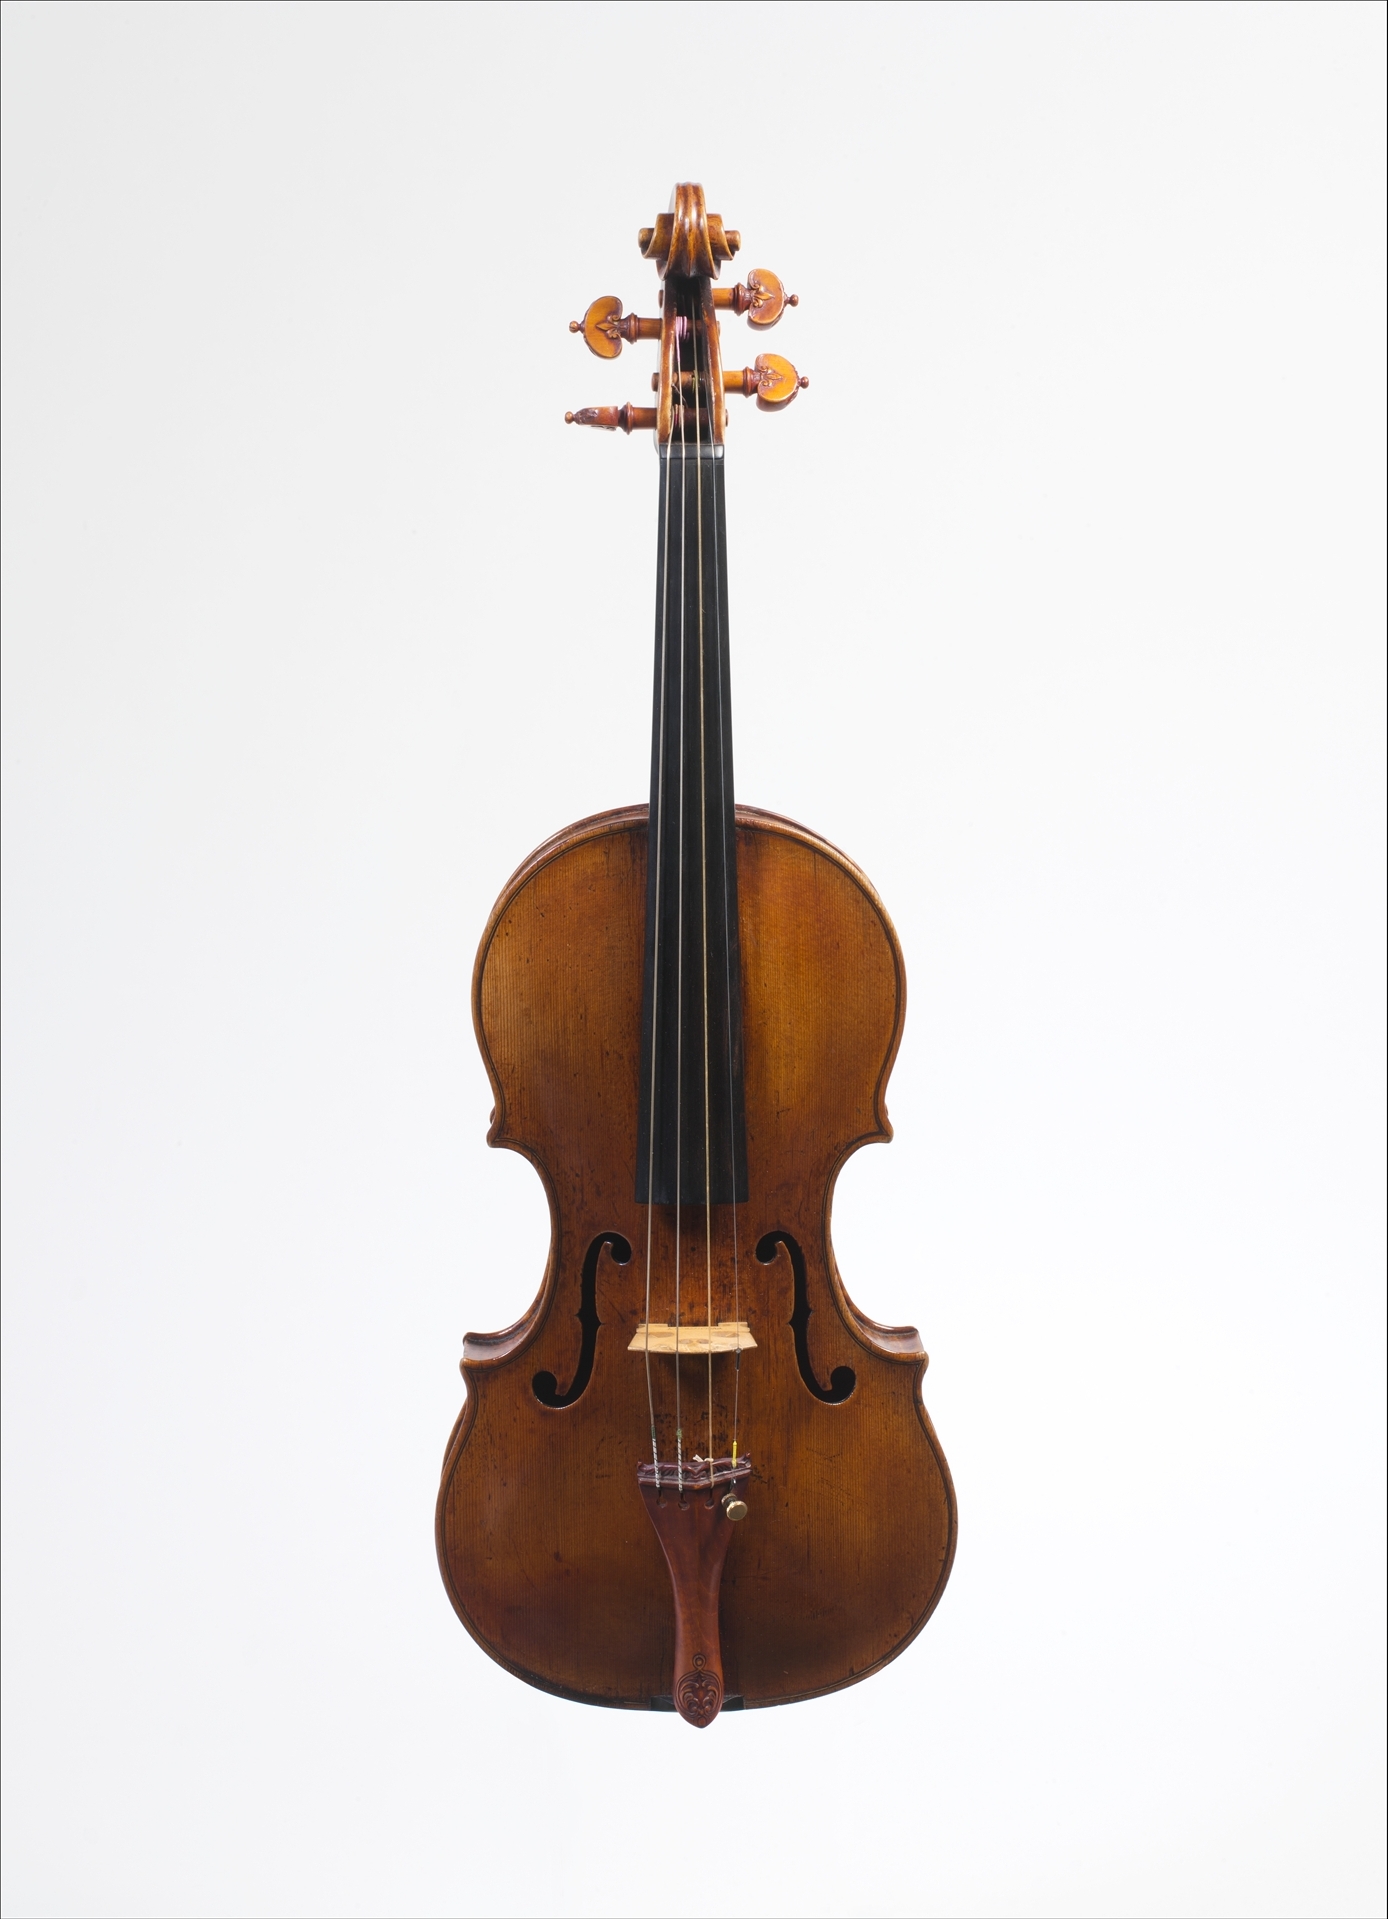 ex "Kurtz" Violin by Andrea Amati - ca. 1560 - 57.4 x 20.2 cm Metropolitan Museum of Art